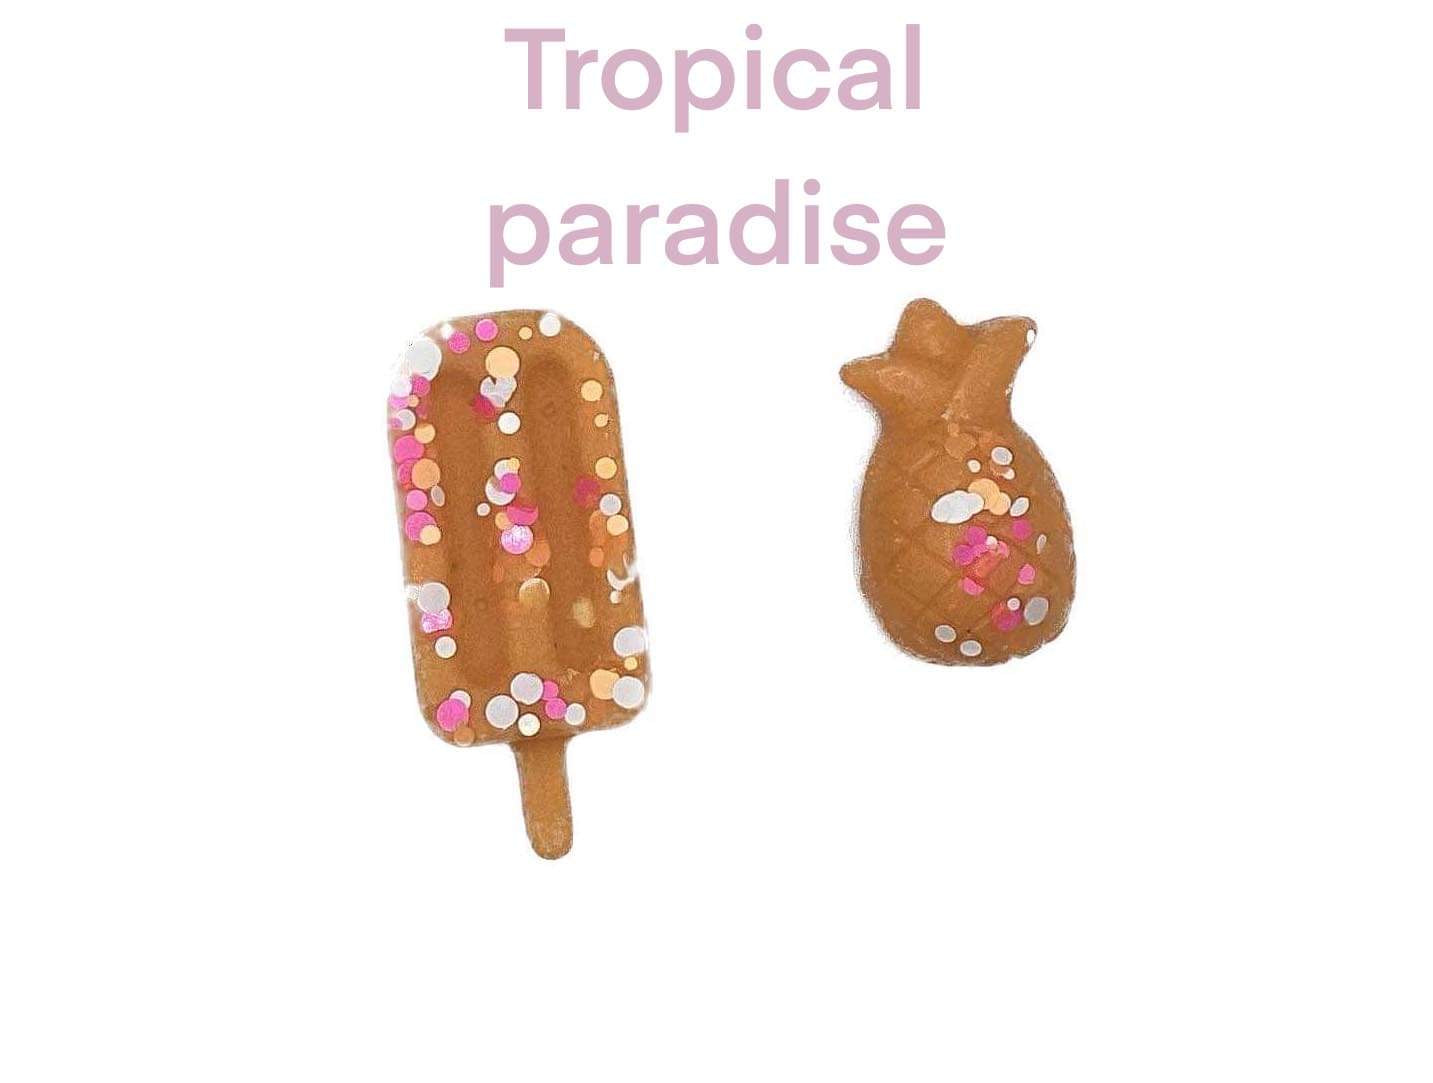 Tropical paradise shapes